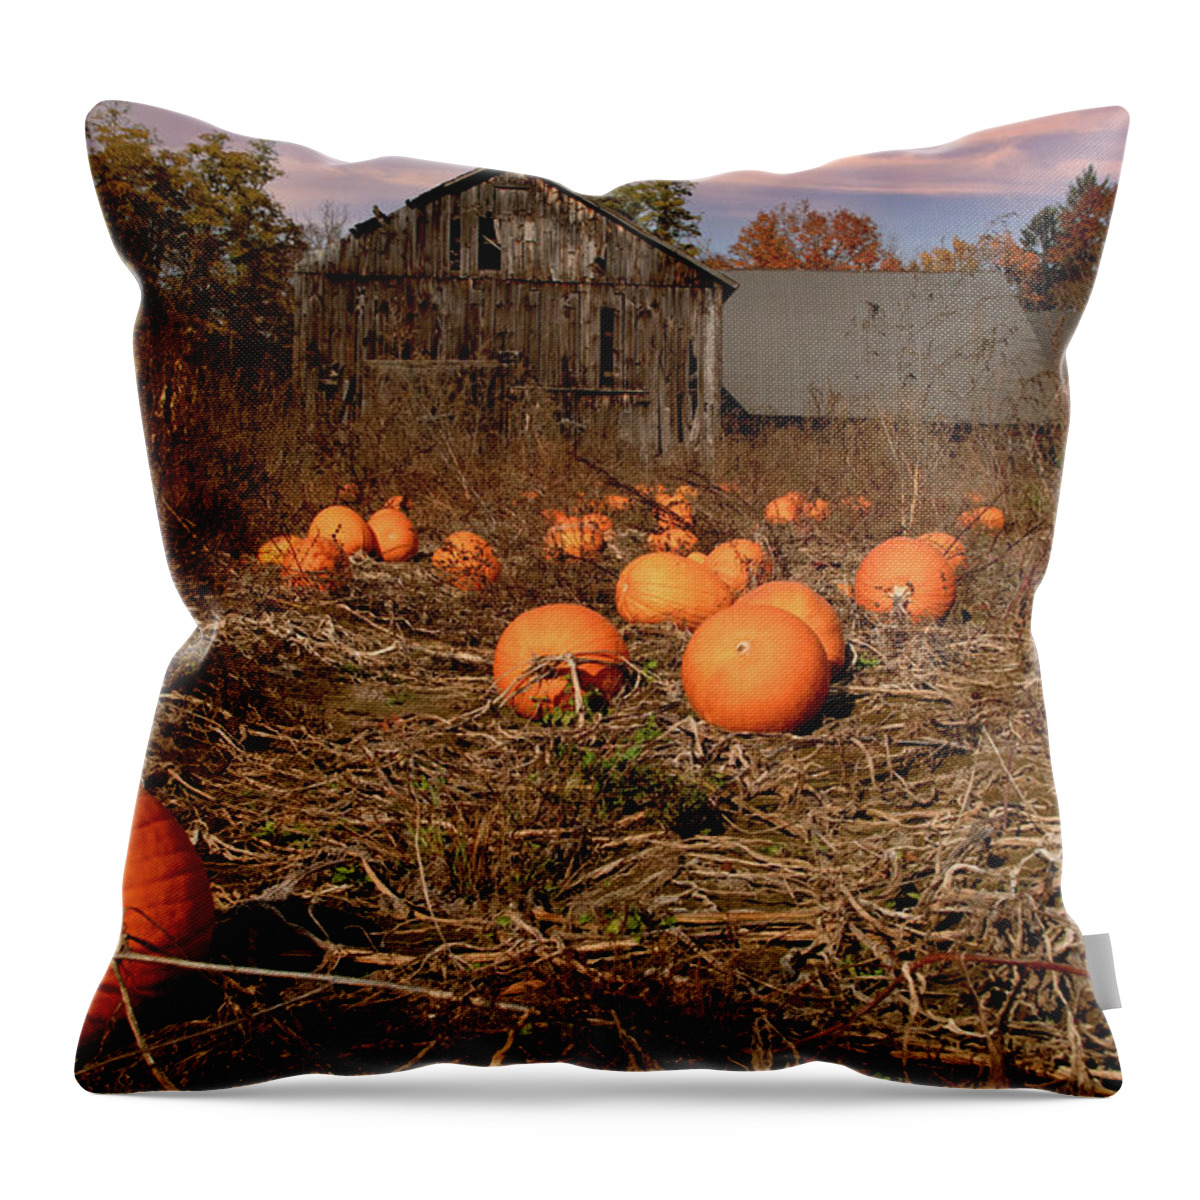 Autumn Foliage Massachusetts Throw Pillow featuring the photograph Halloween Pumpkin Patch in Hatfield by Jeff Folger